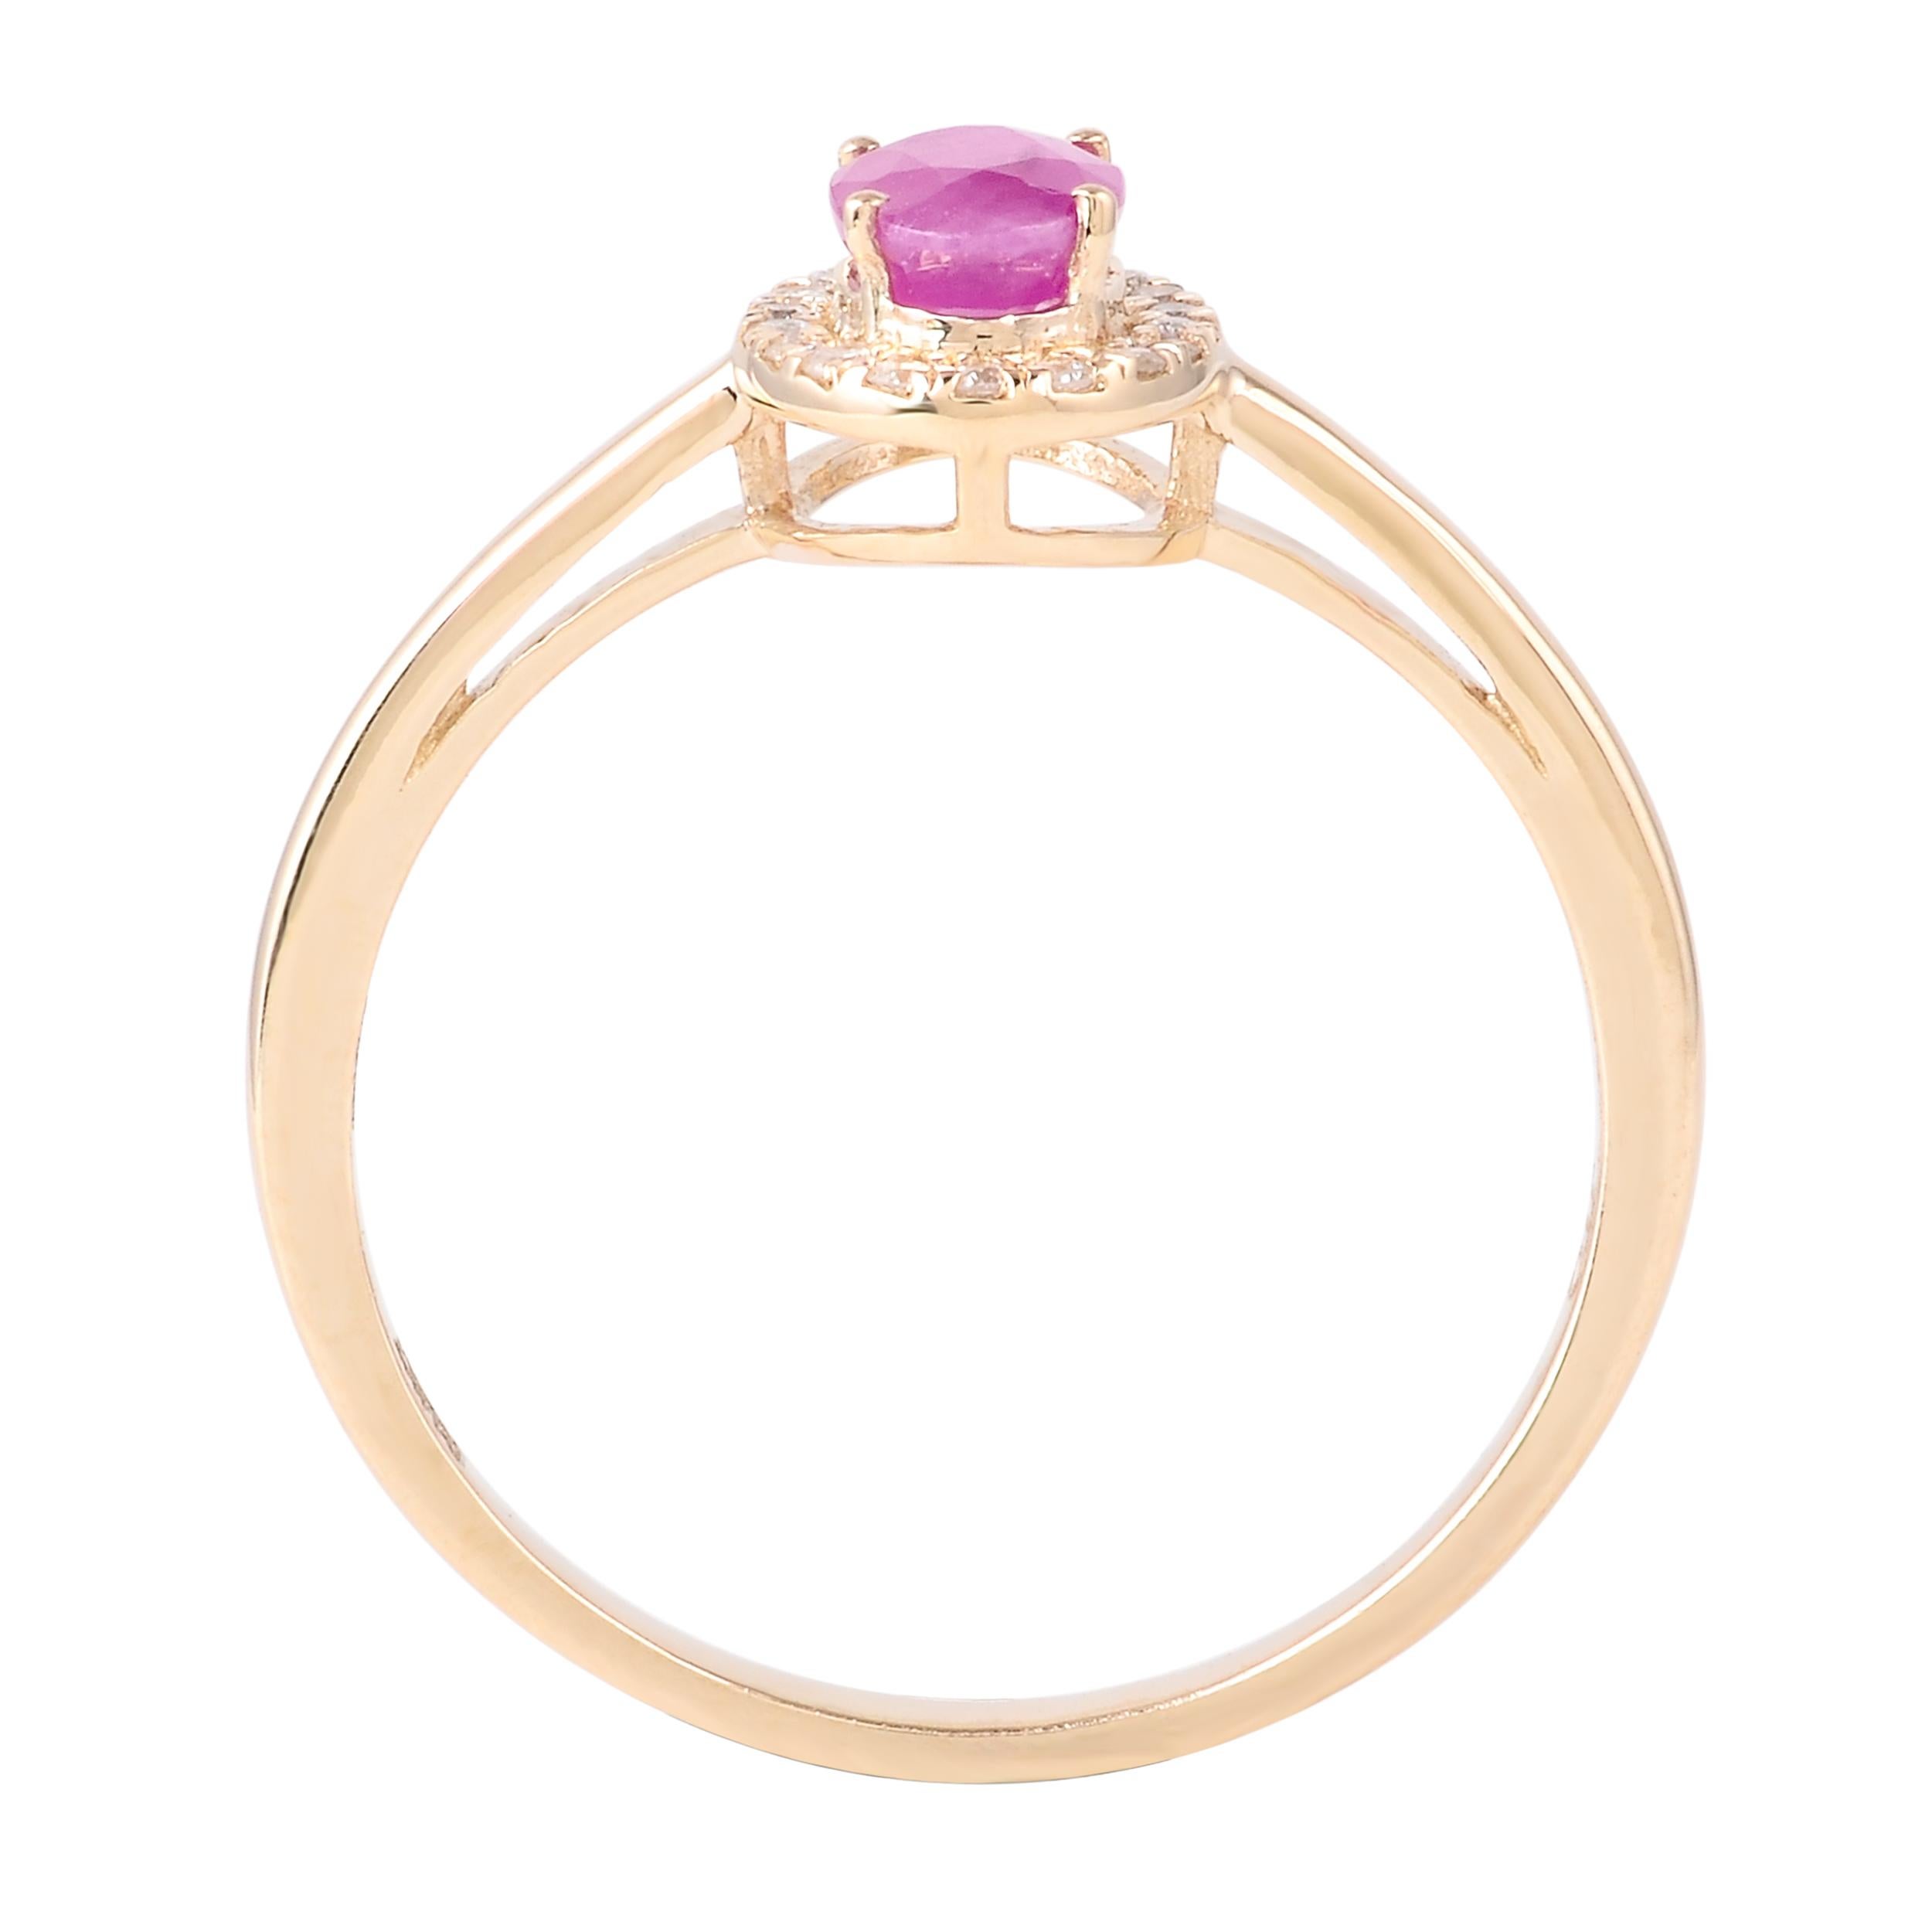 Elegant 14K Ruby & Diamond Cocktail Ring, Size 7 - Statement Jewelry Piece For Sale 3